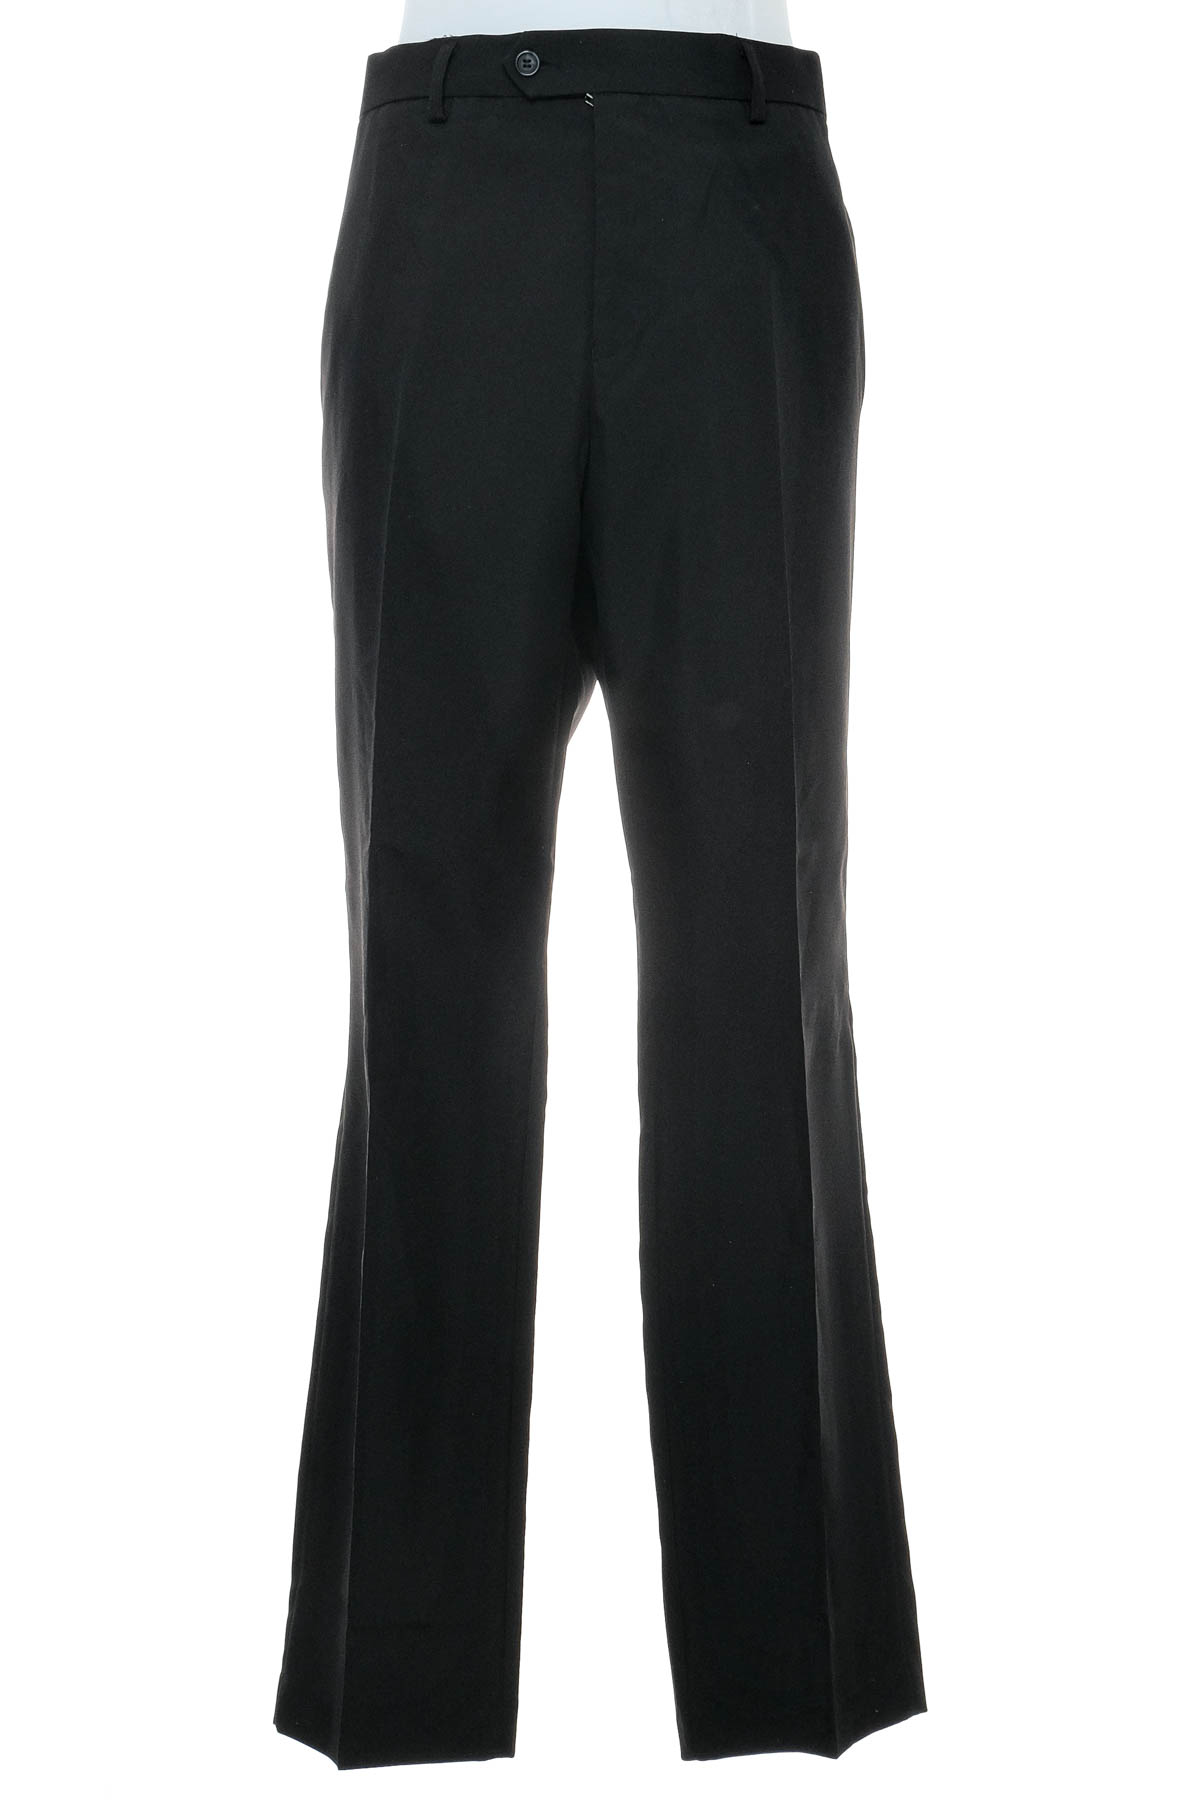 Pantalon pentru bărbați - Bpc selection bonprix collection - 0